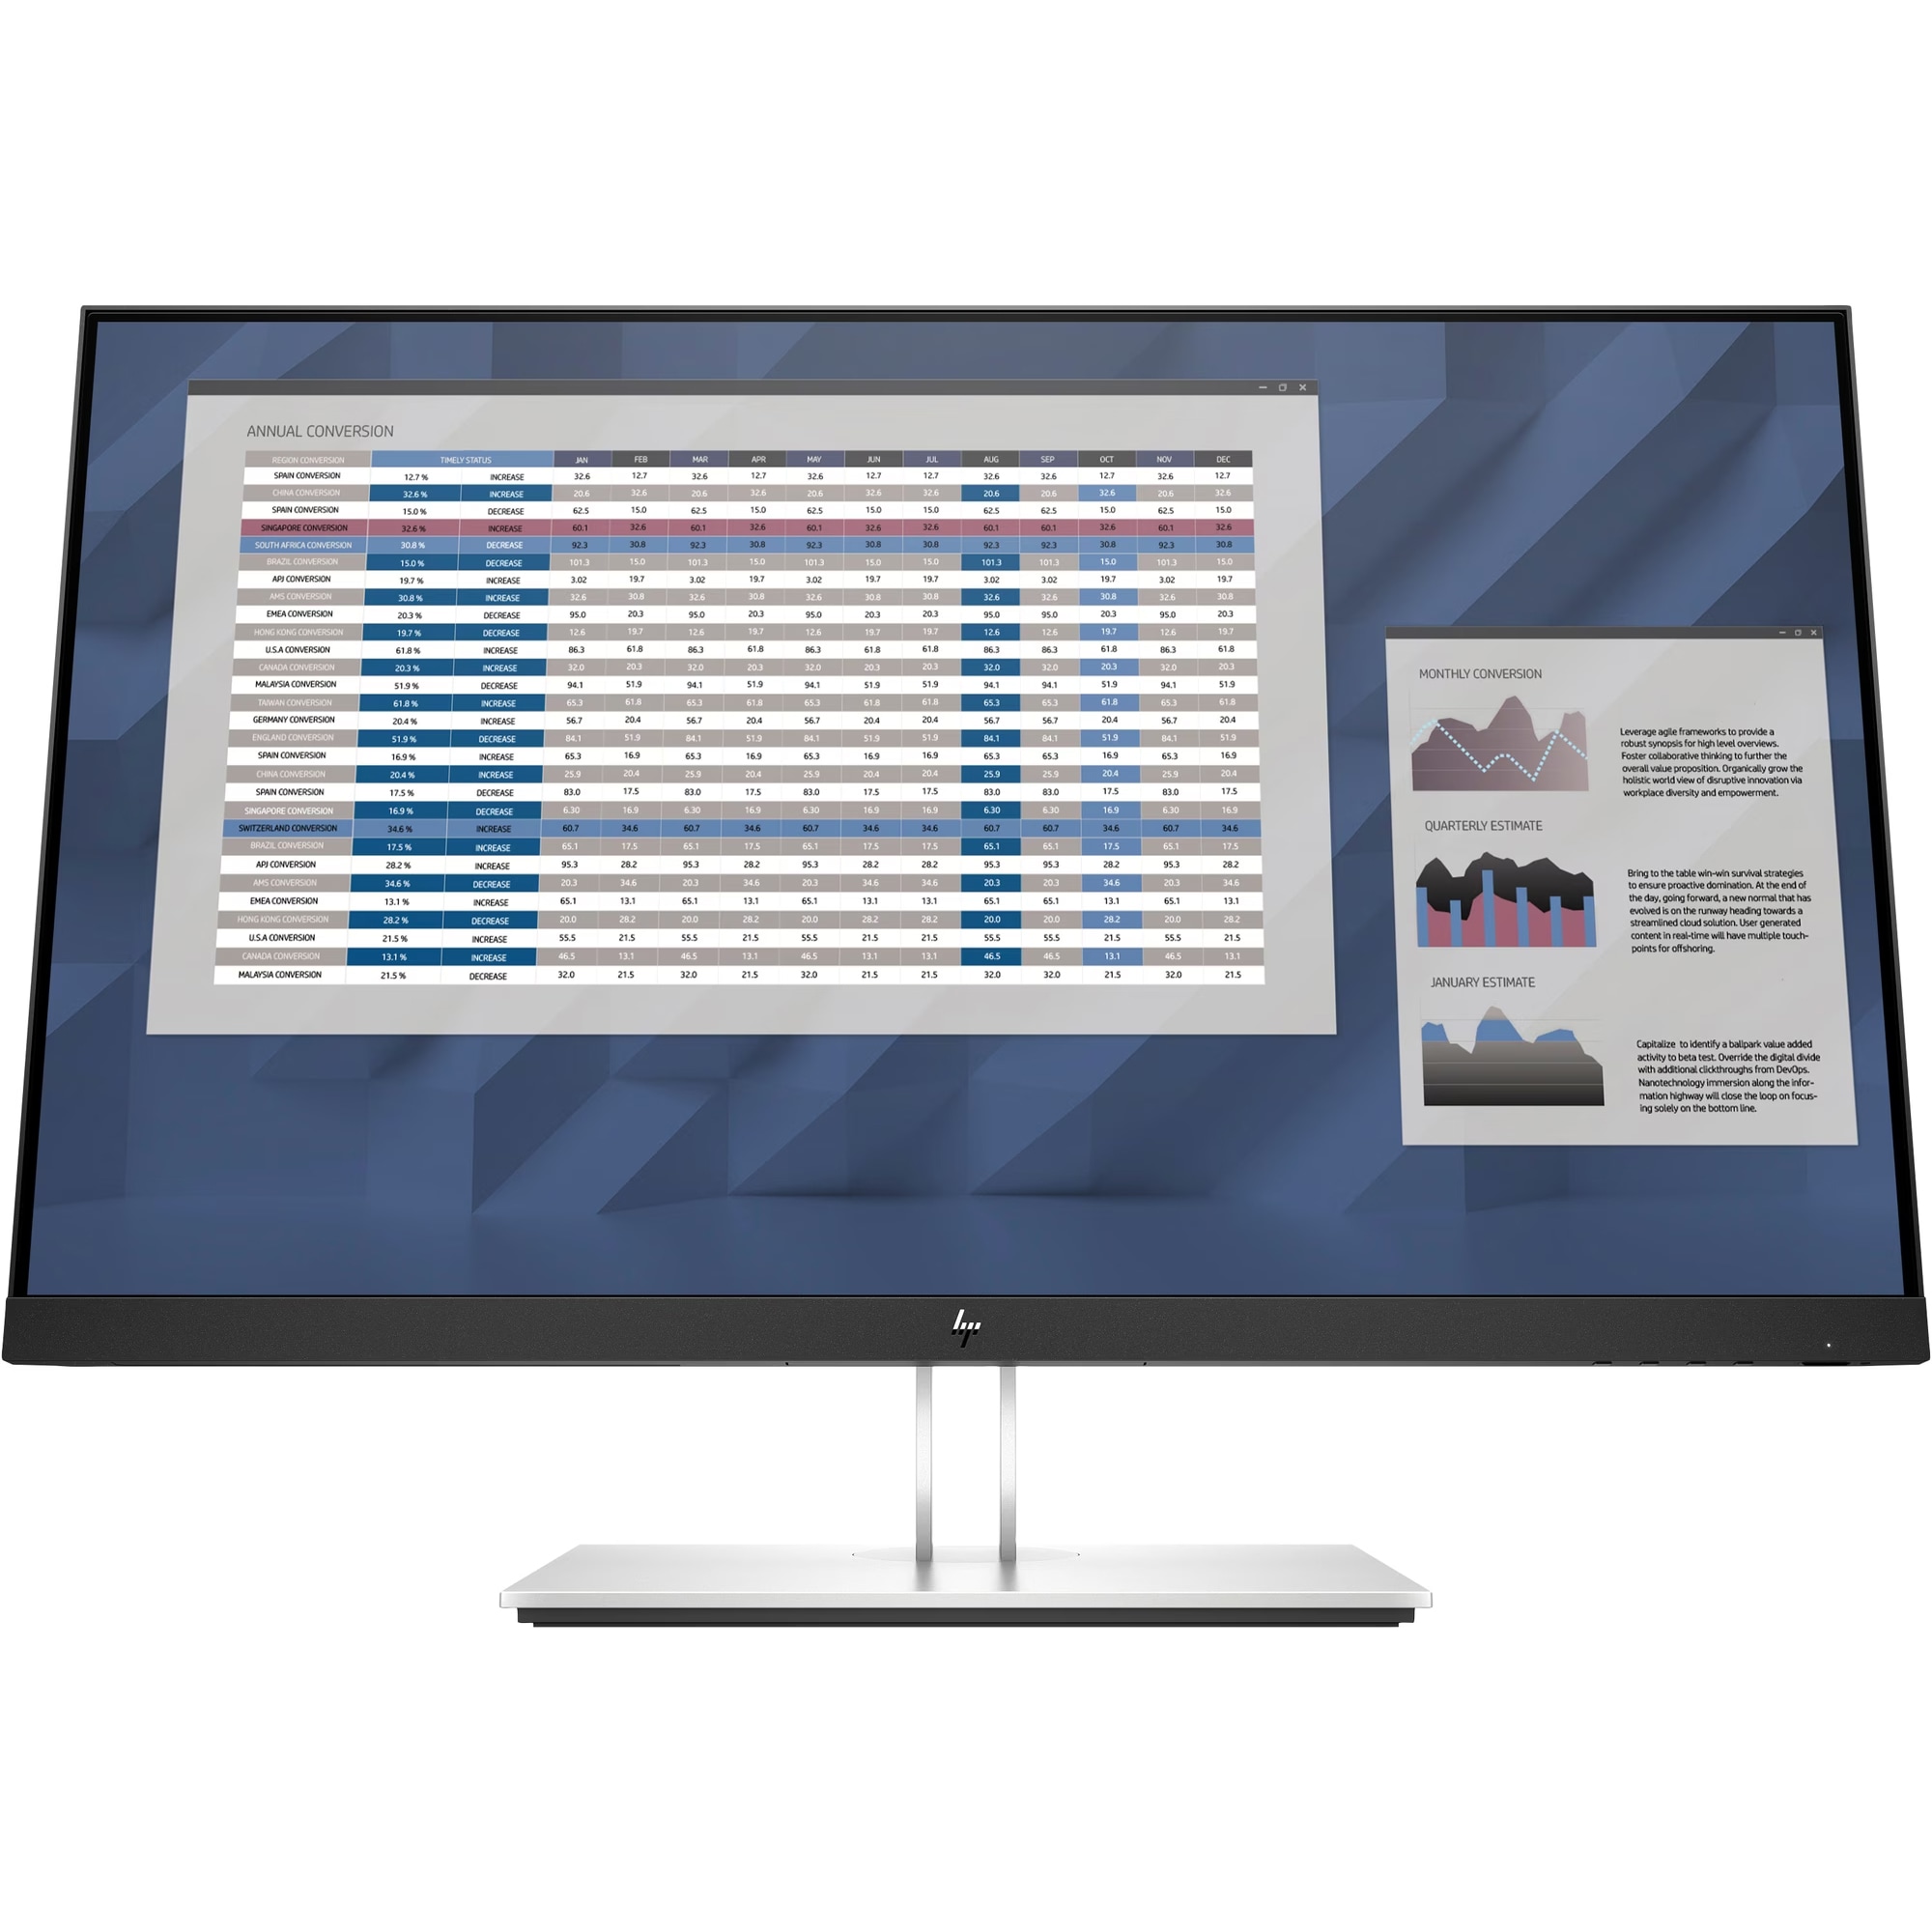 HP - Monitor - Produktbillede